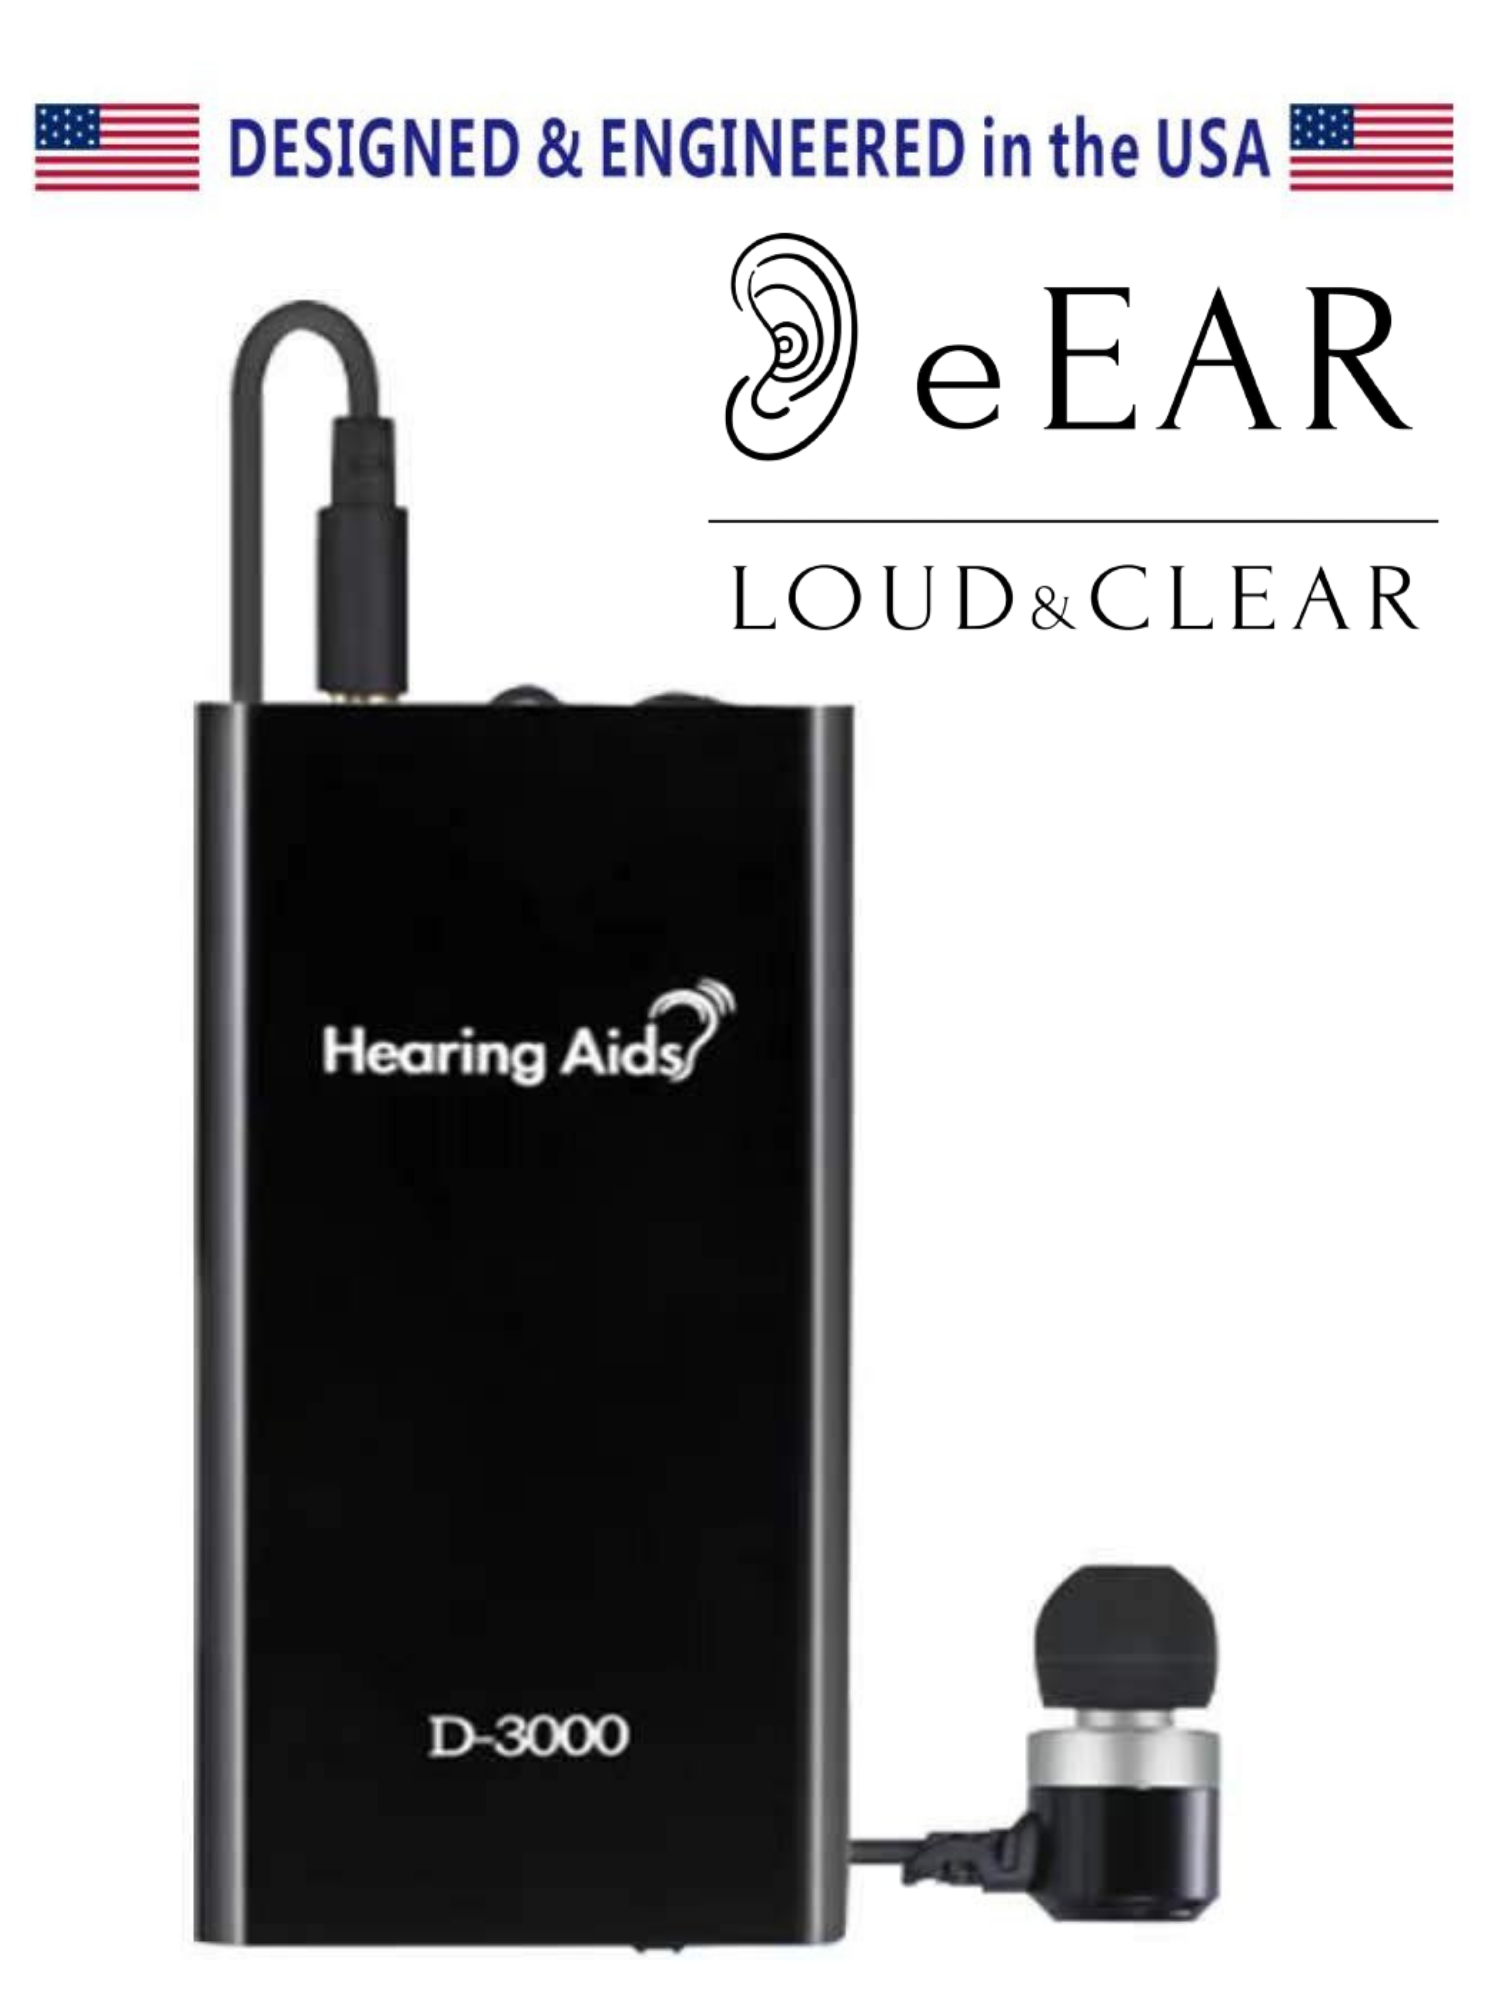 eEAR D-3000 袖珍型助听器在美国设计和制造